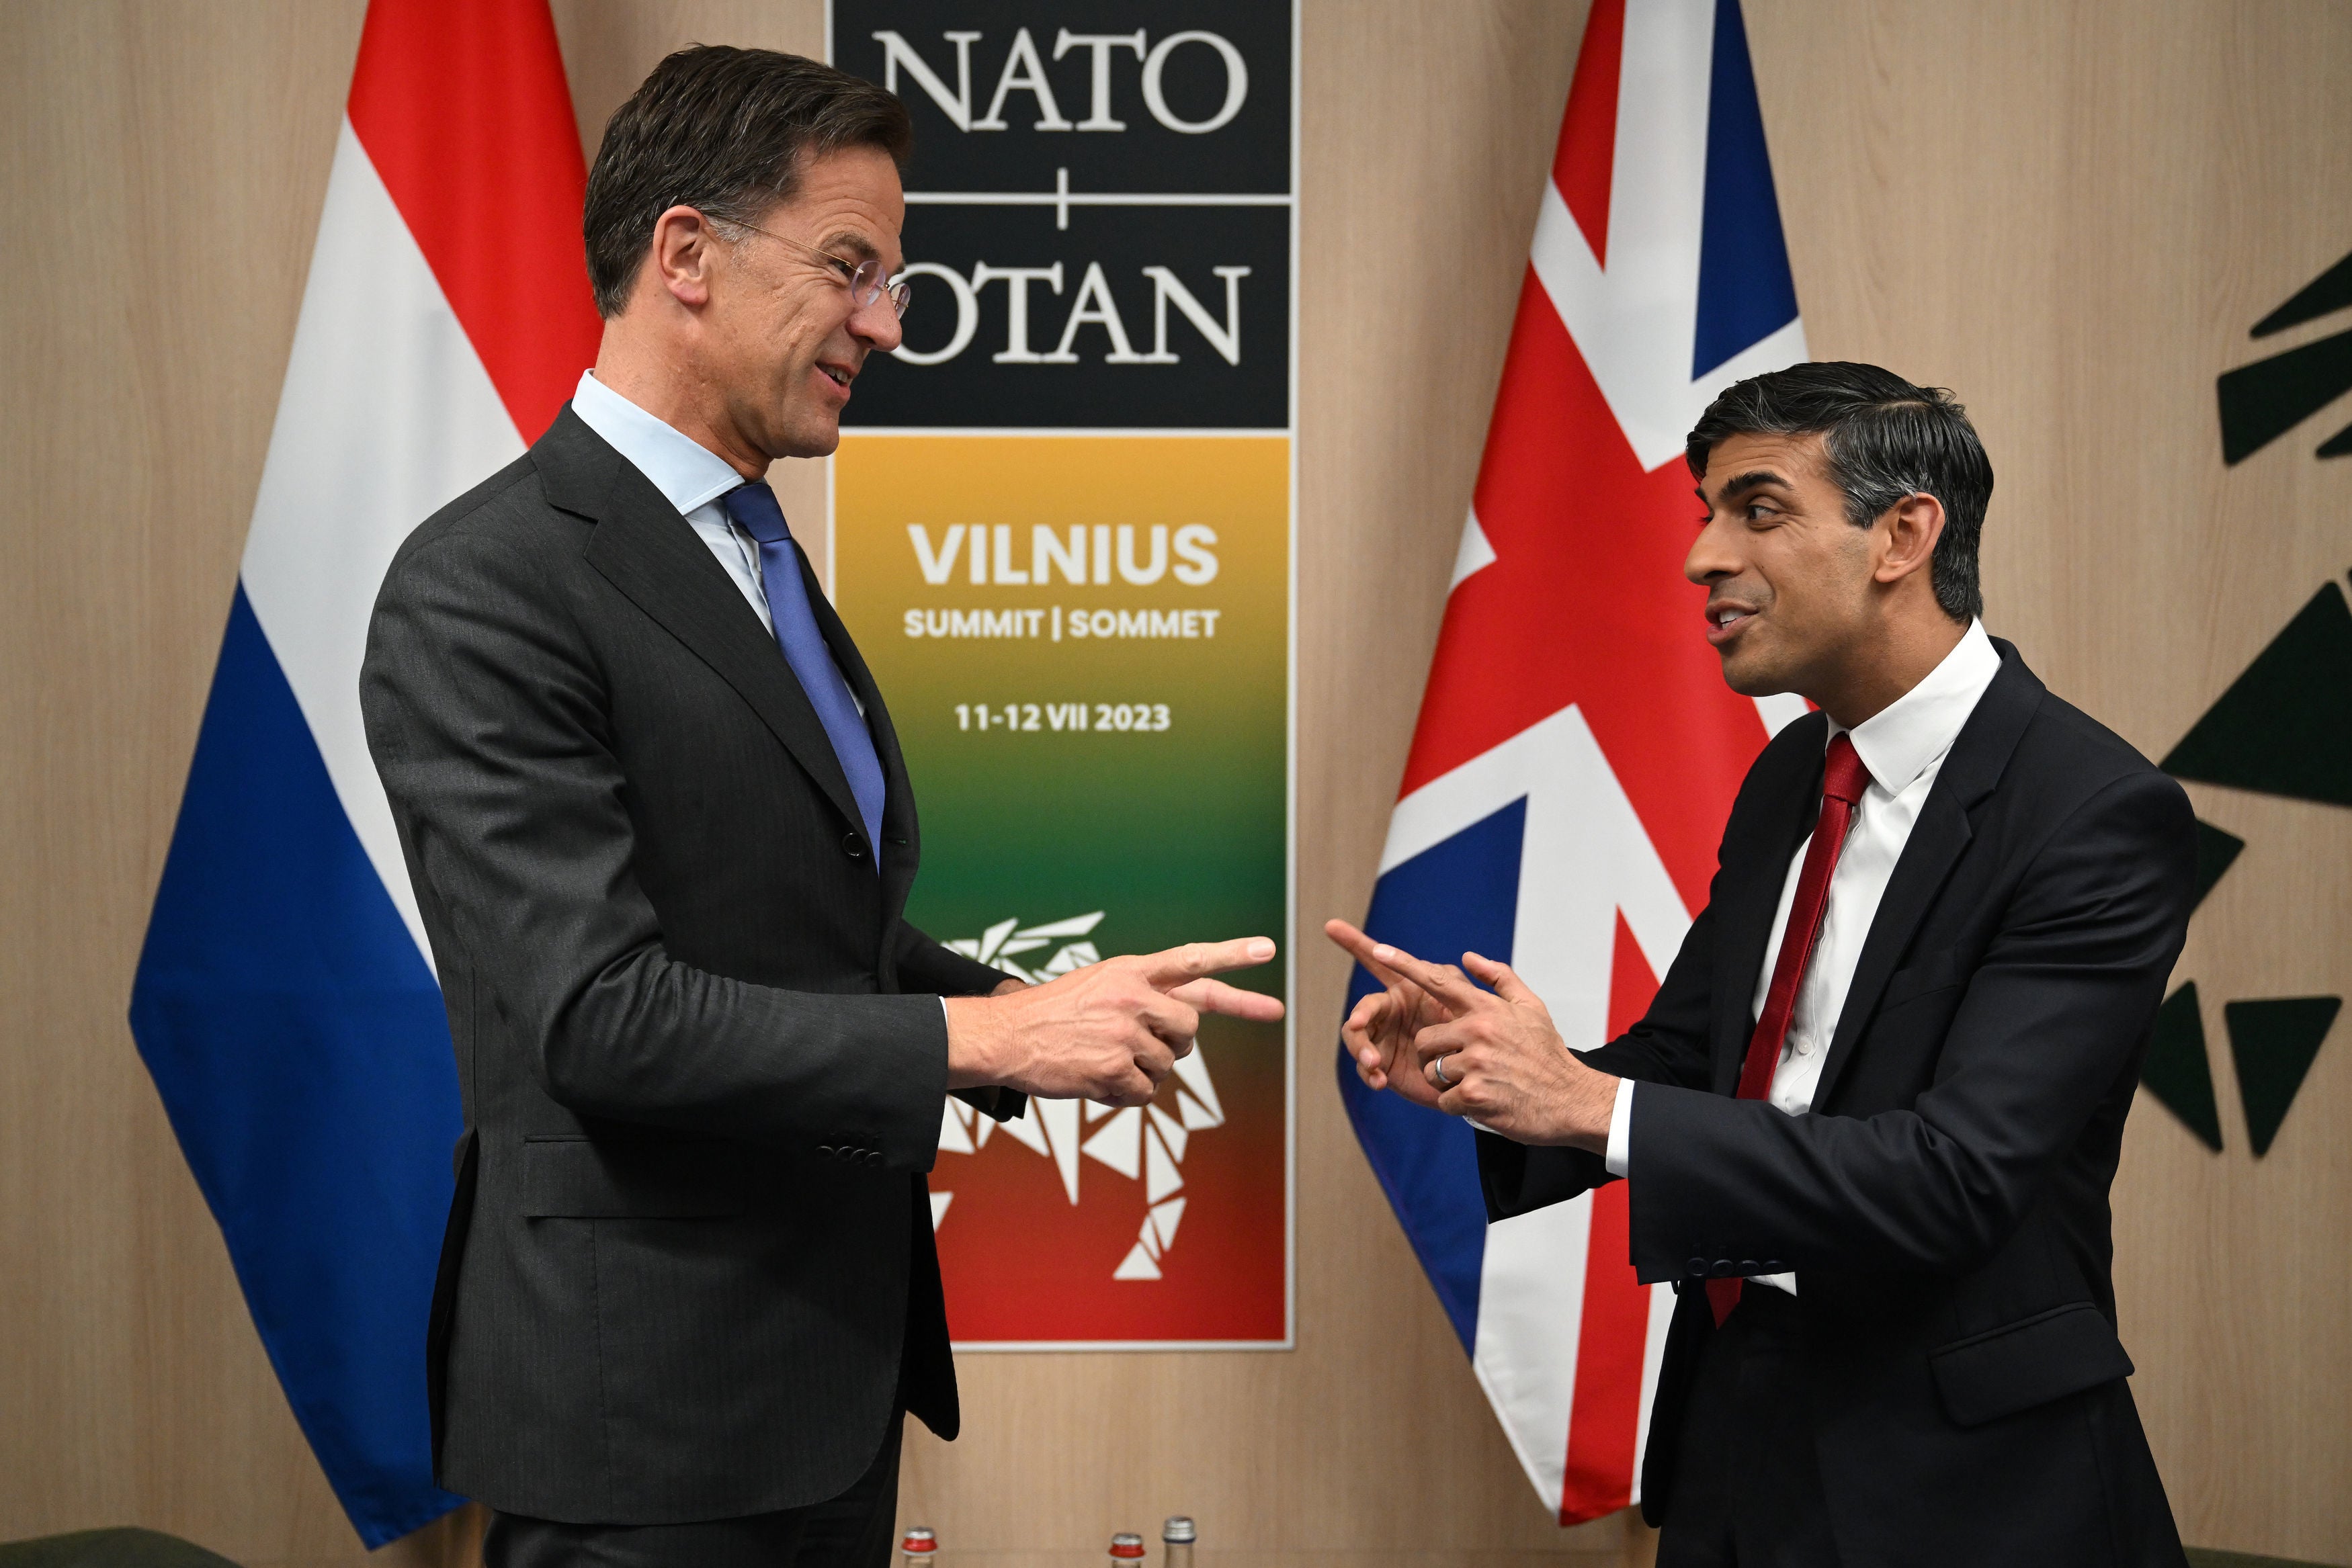 Rishi Sunak meets his Dutch counterpart Mark Rutte in Vilnius